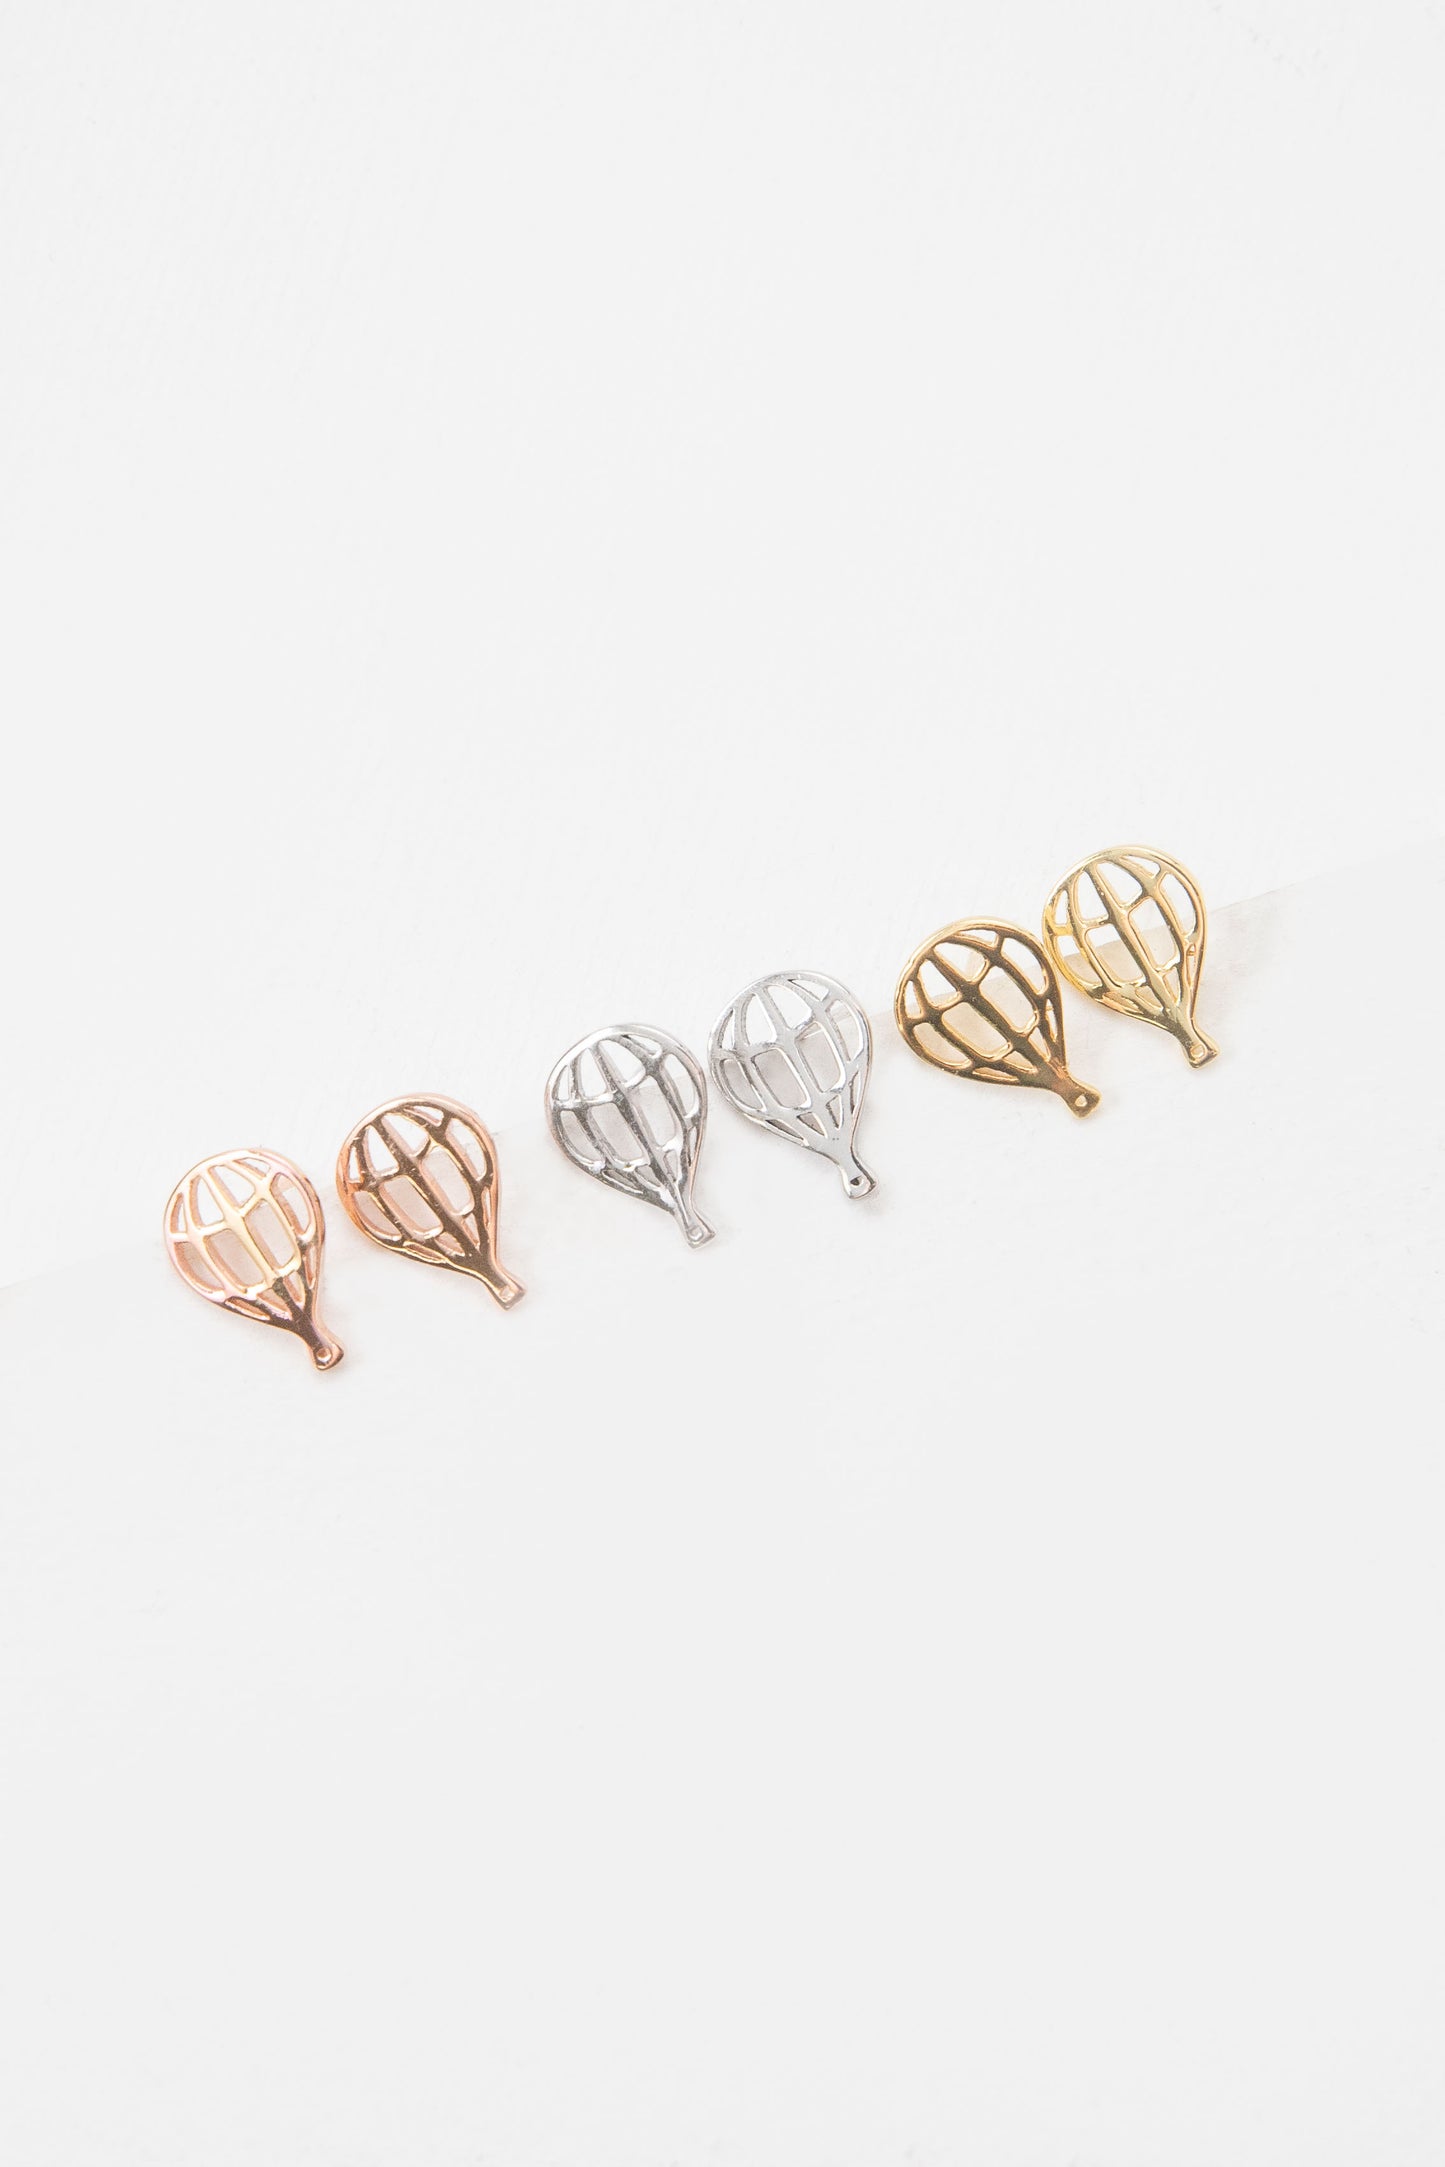 Hot Air Balloon Earrings (18K Rose & 24K Gold)